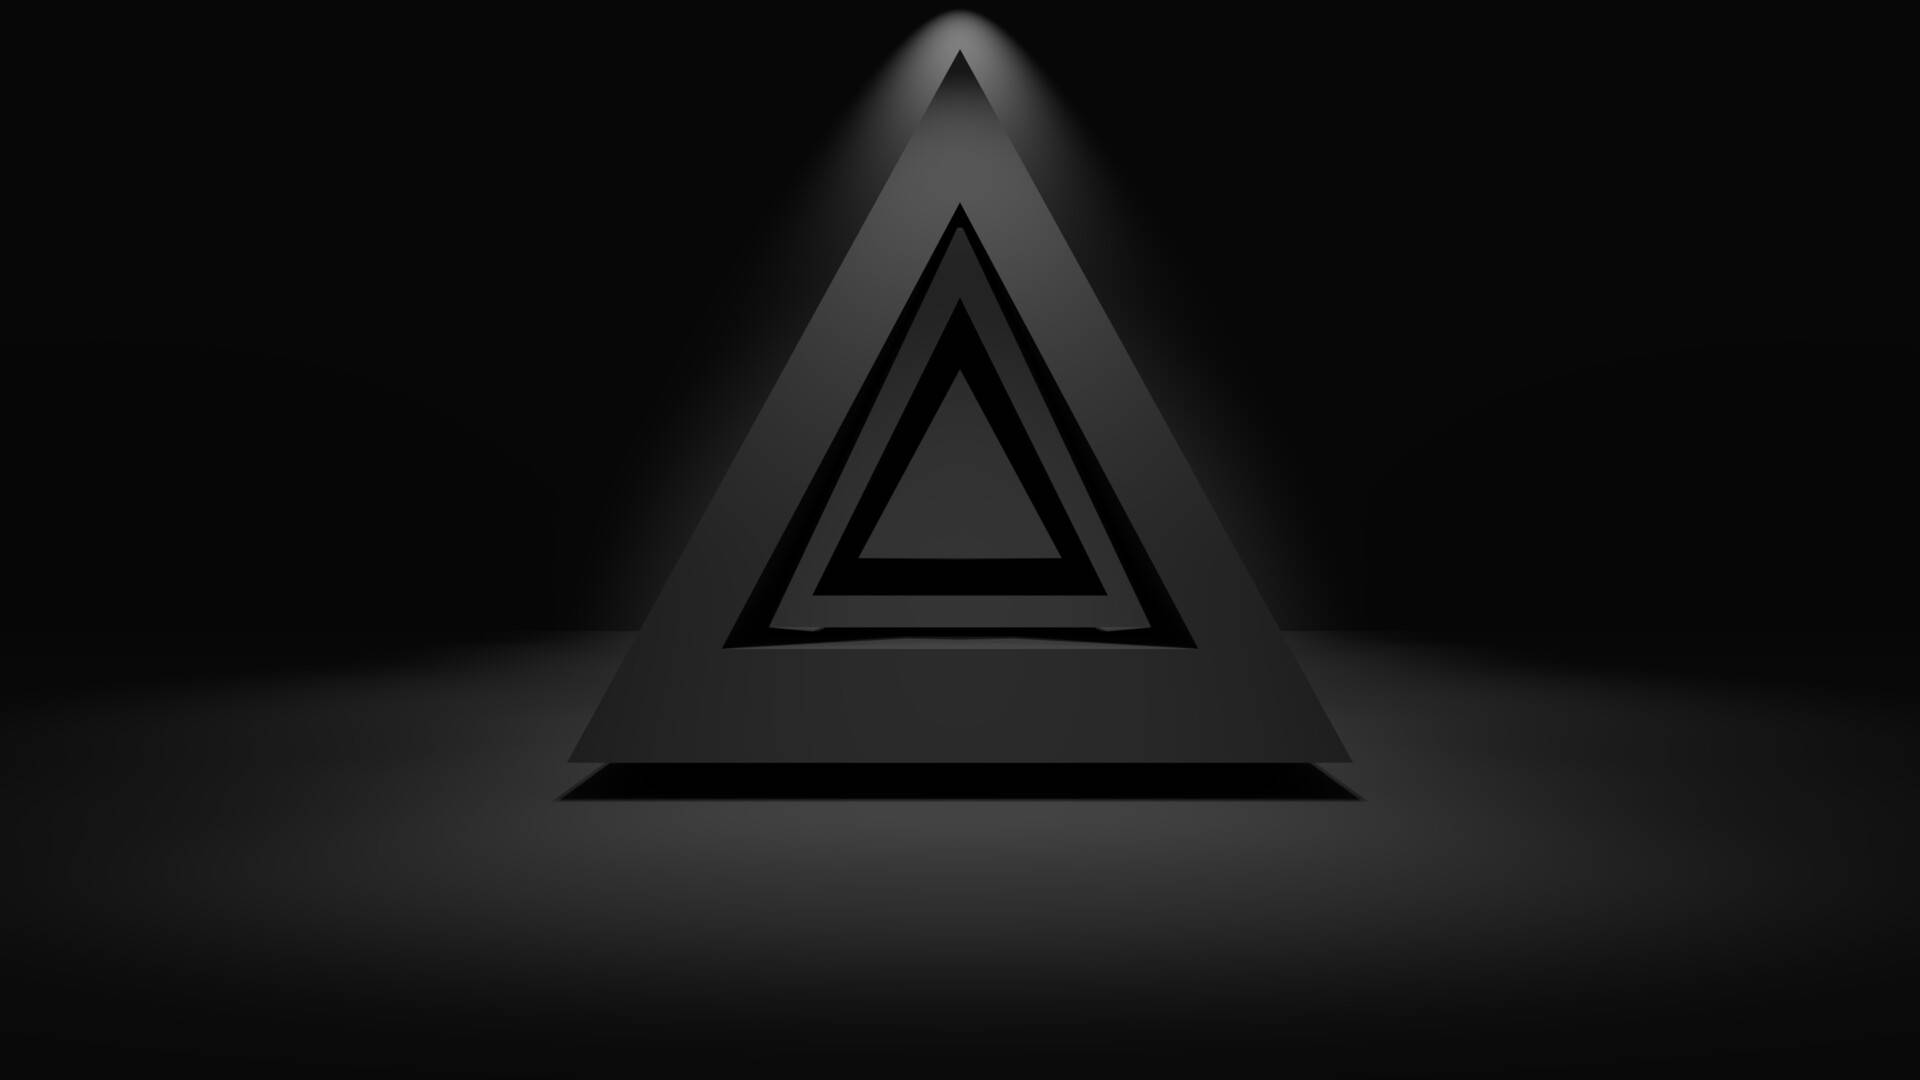 Black Pyramid Aesthetic Background